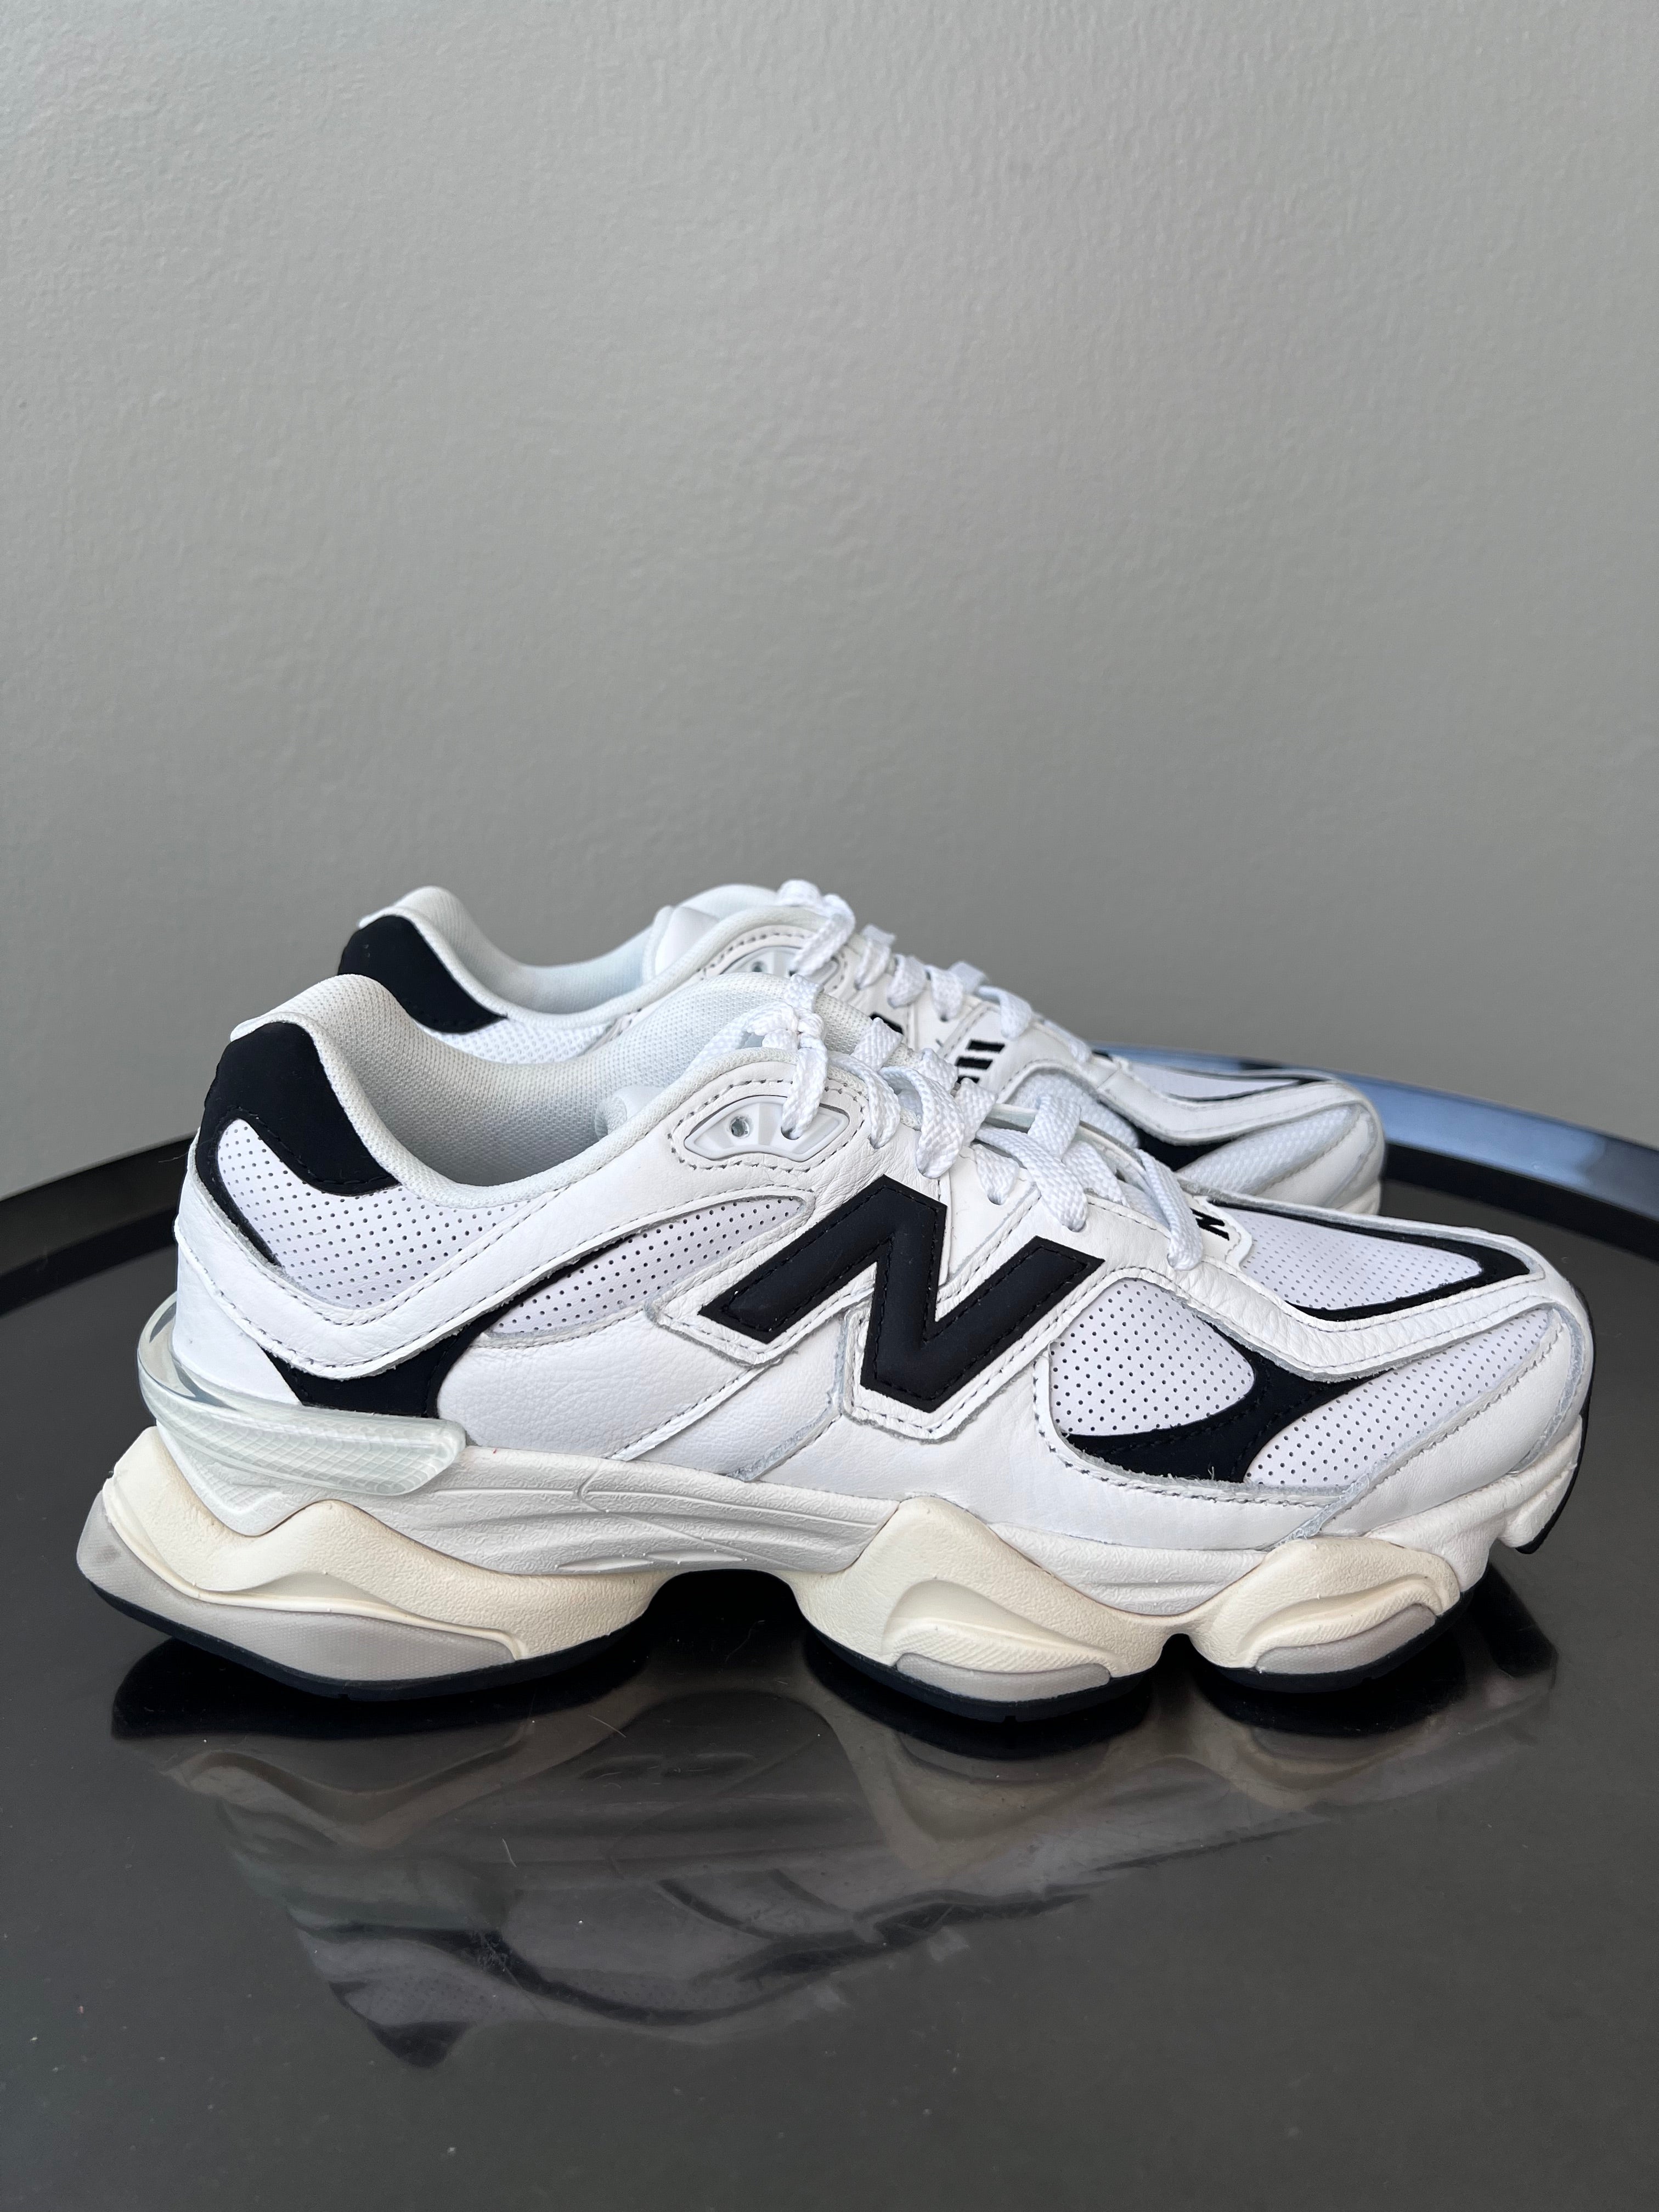 White and Black 9060 sea salt Shoes - New Balance